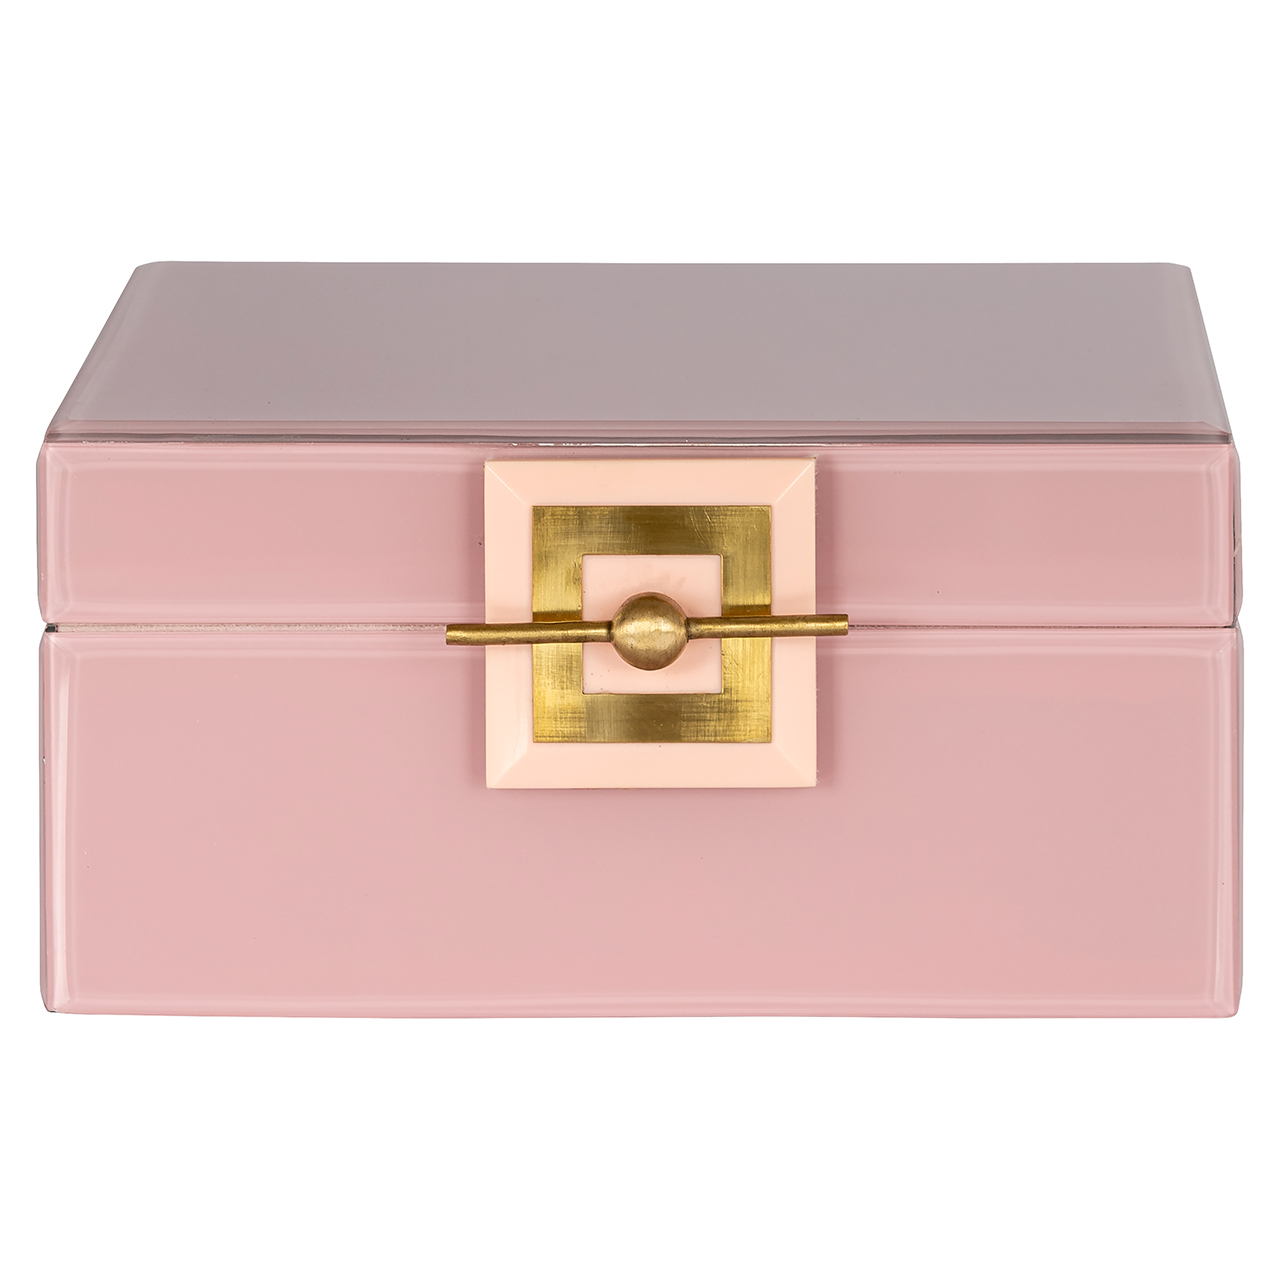 Juwelen box Bodine roze groot